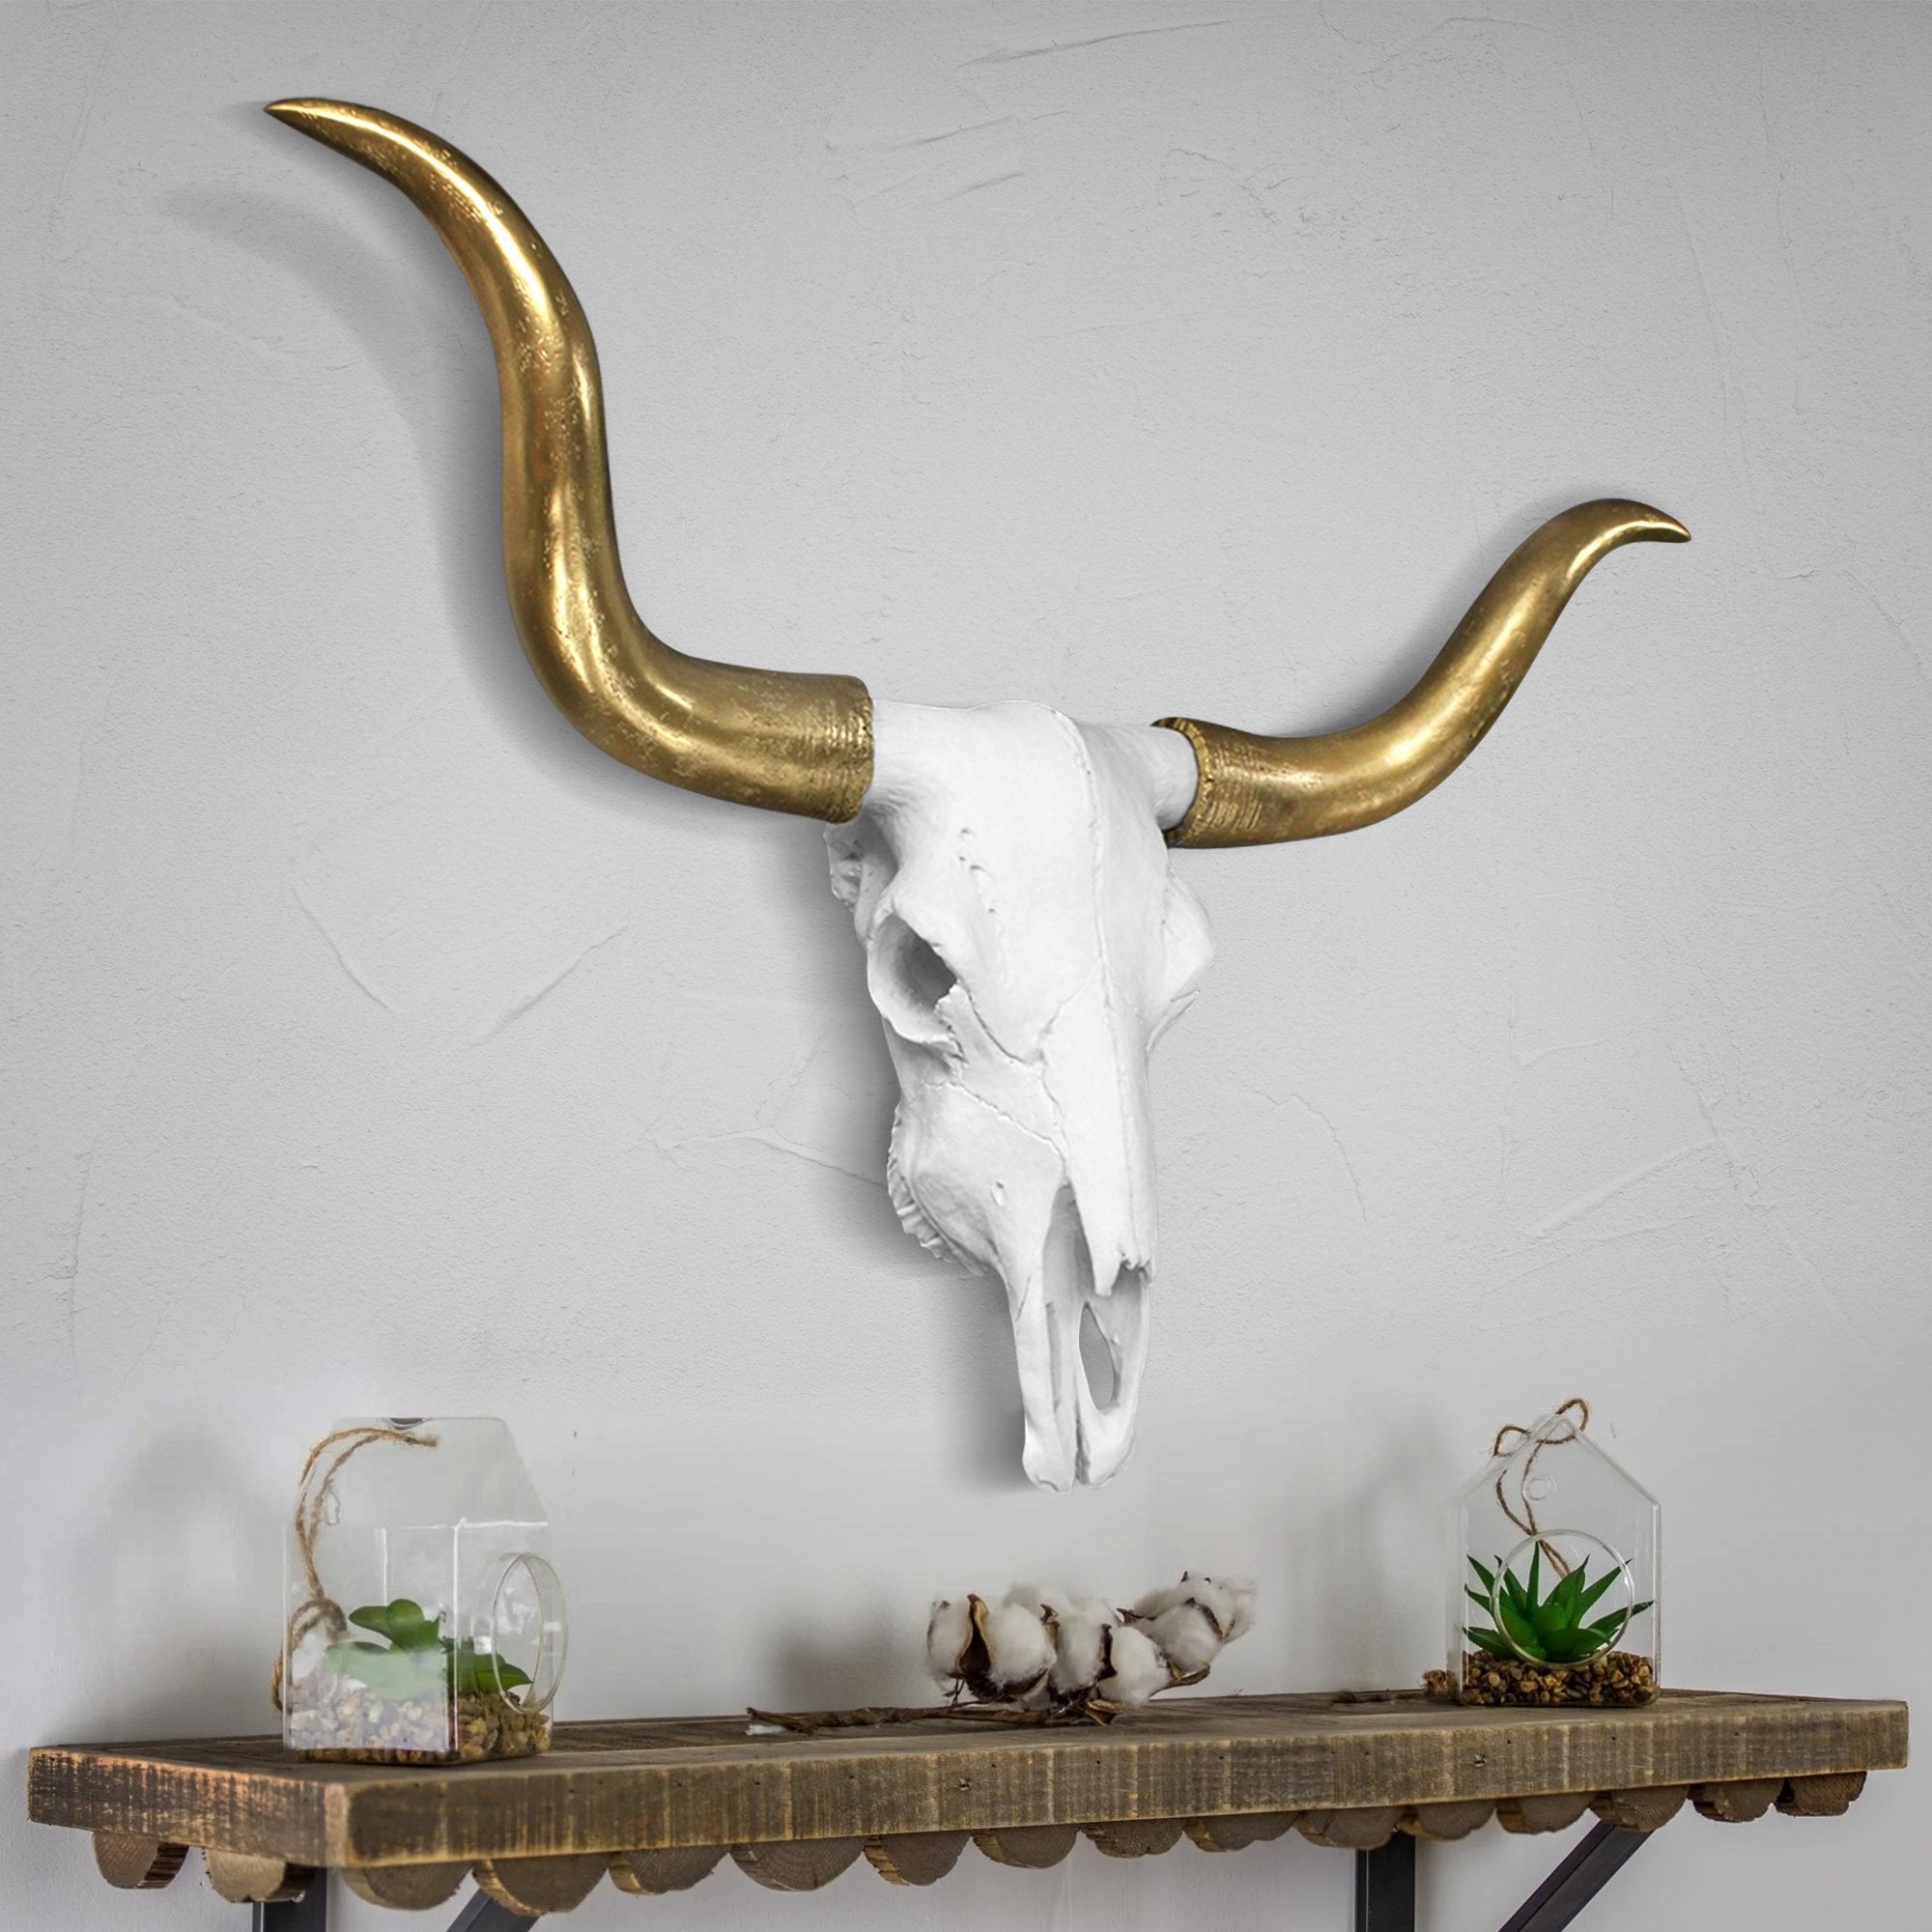 Faux longhorn skull, faux longhorn, fake longhorn skull, animal skull wall mount, farmhouse decor